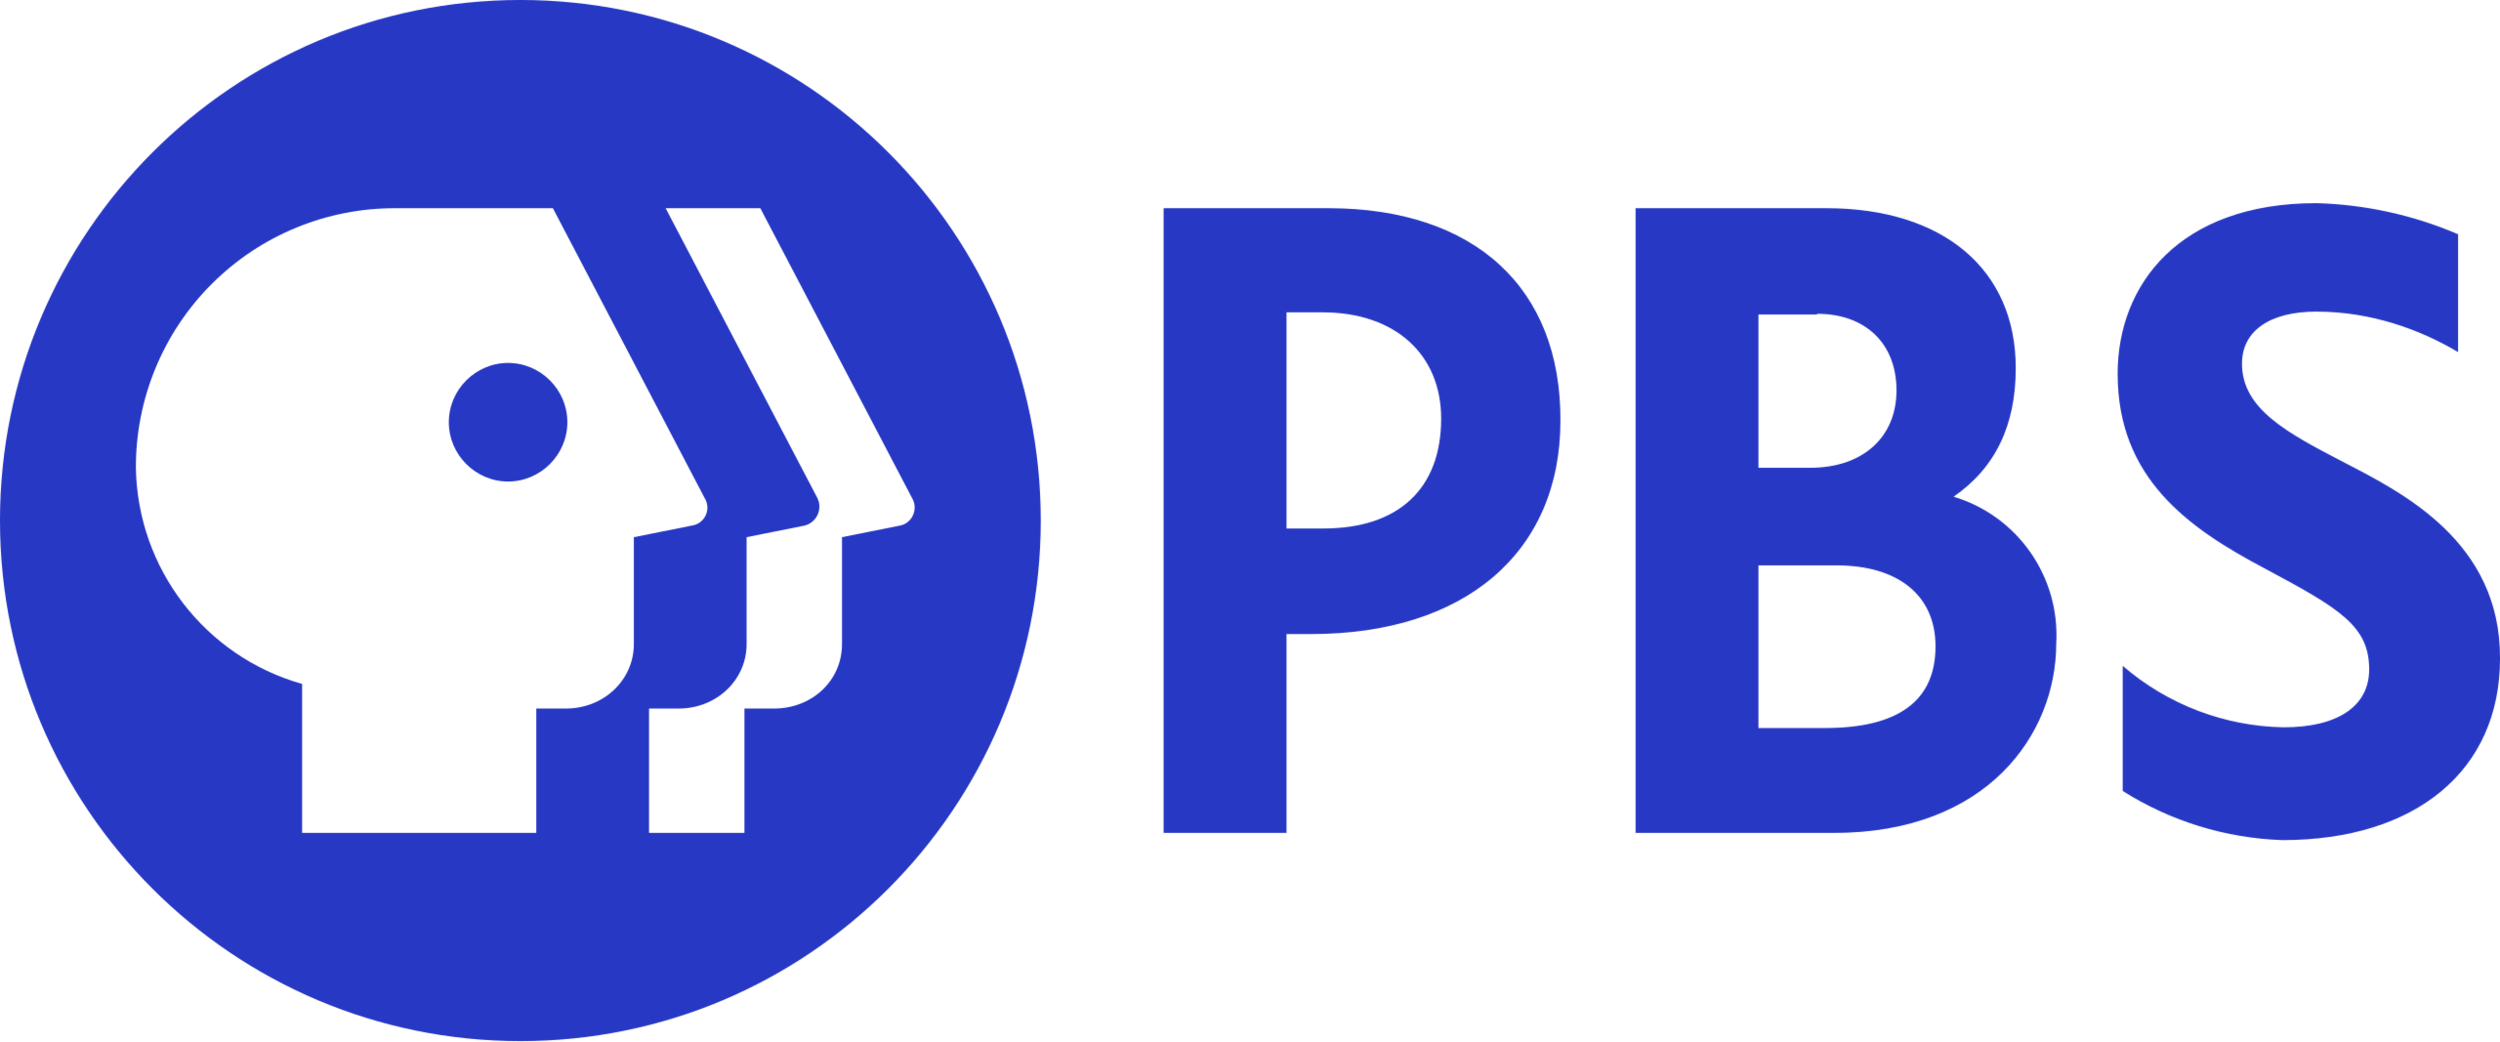 2560px-PBS_logo.svg.png